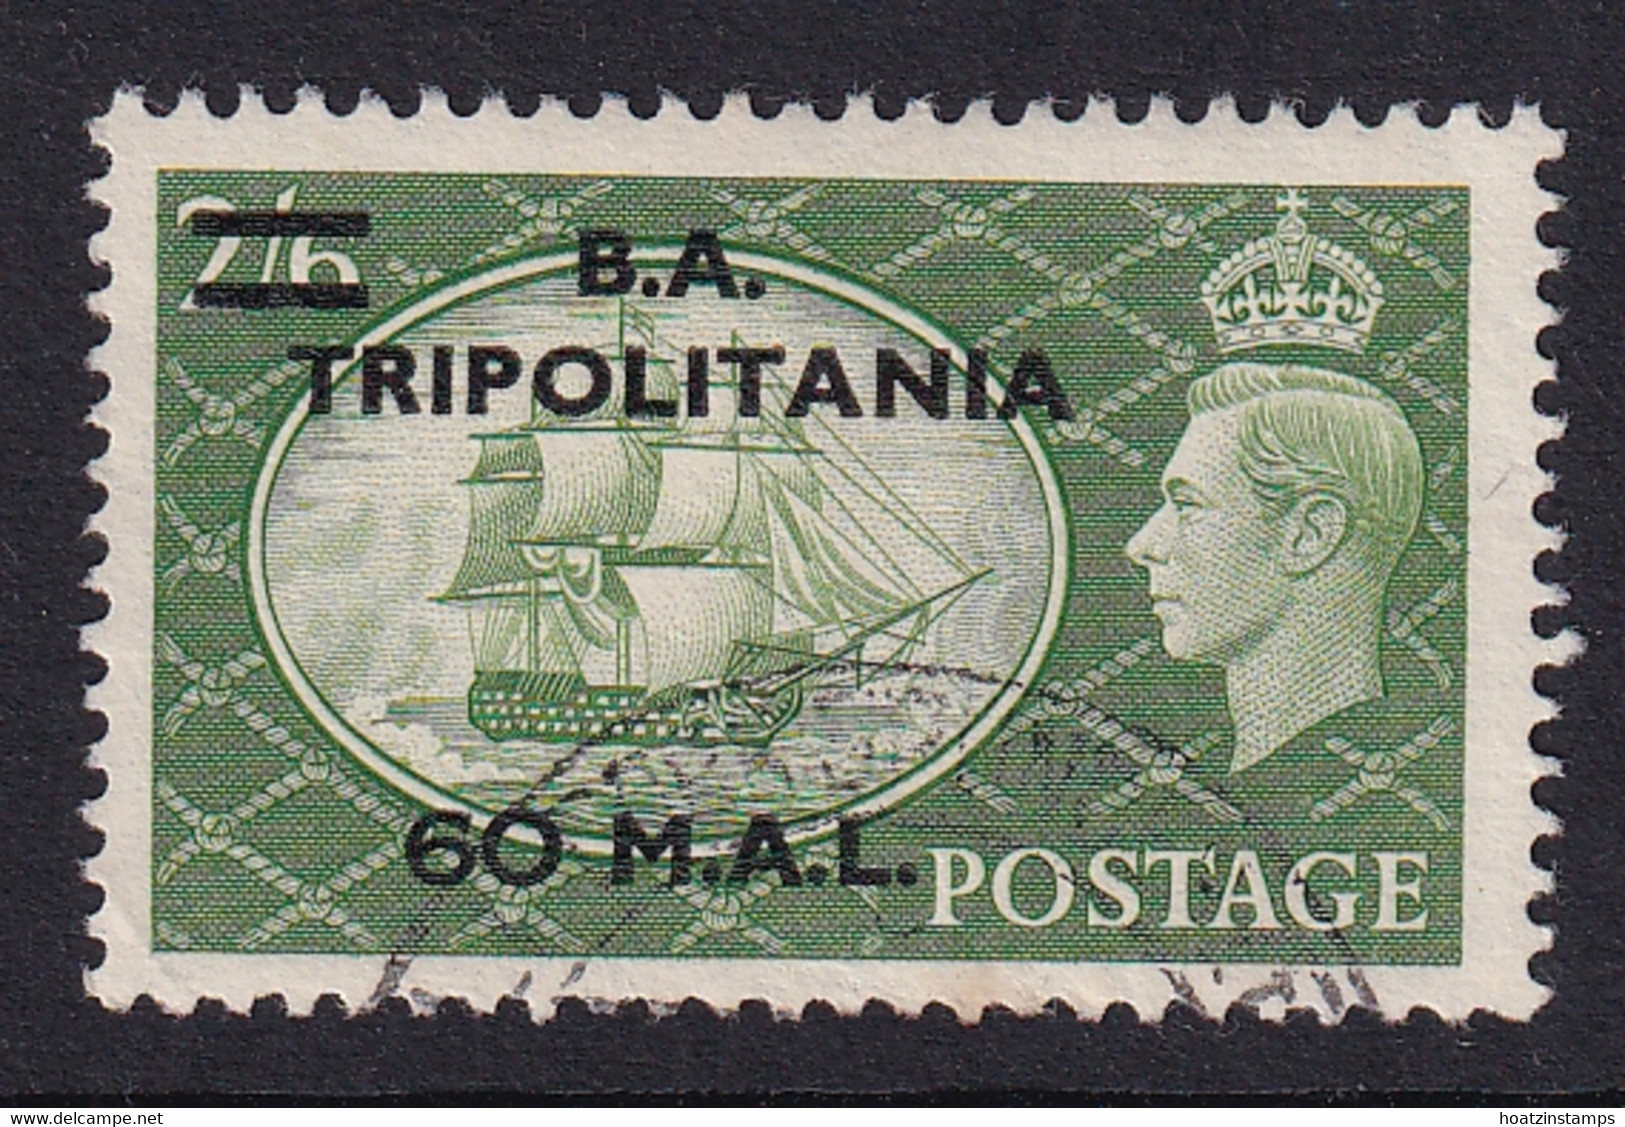 Tripolitania: 1951   KGVI 'B. A. Tripolitania' OVPT   SG T32    60l On 2/6d    Used - Tripolitania